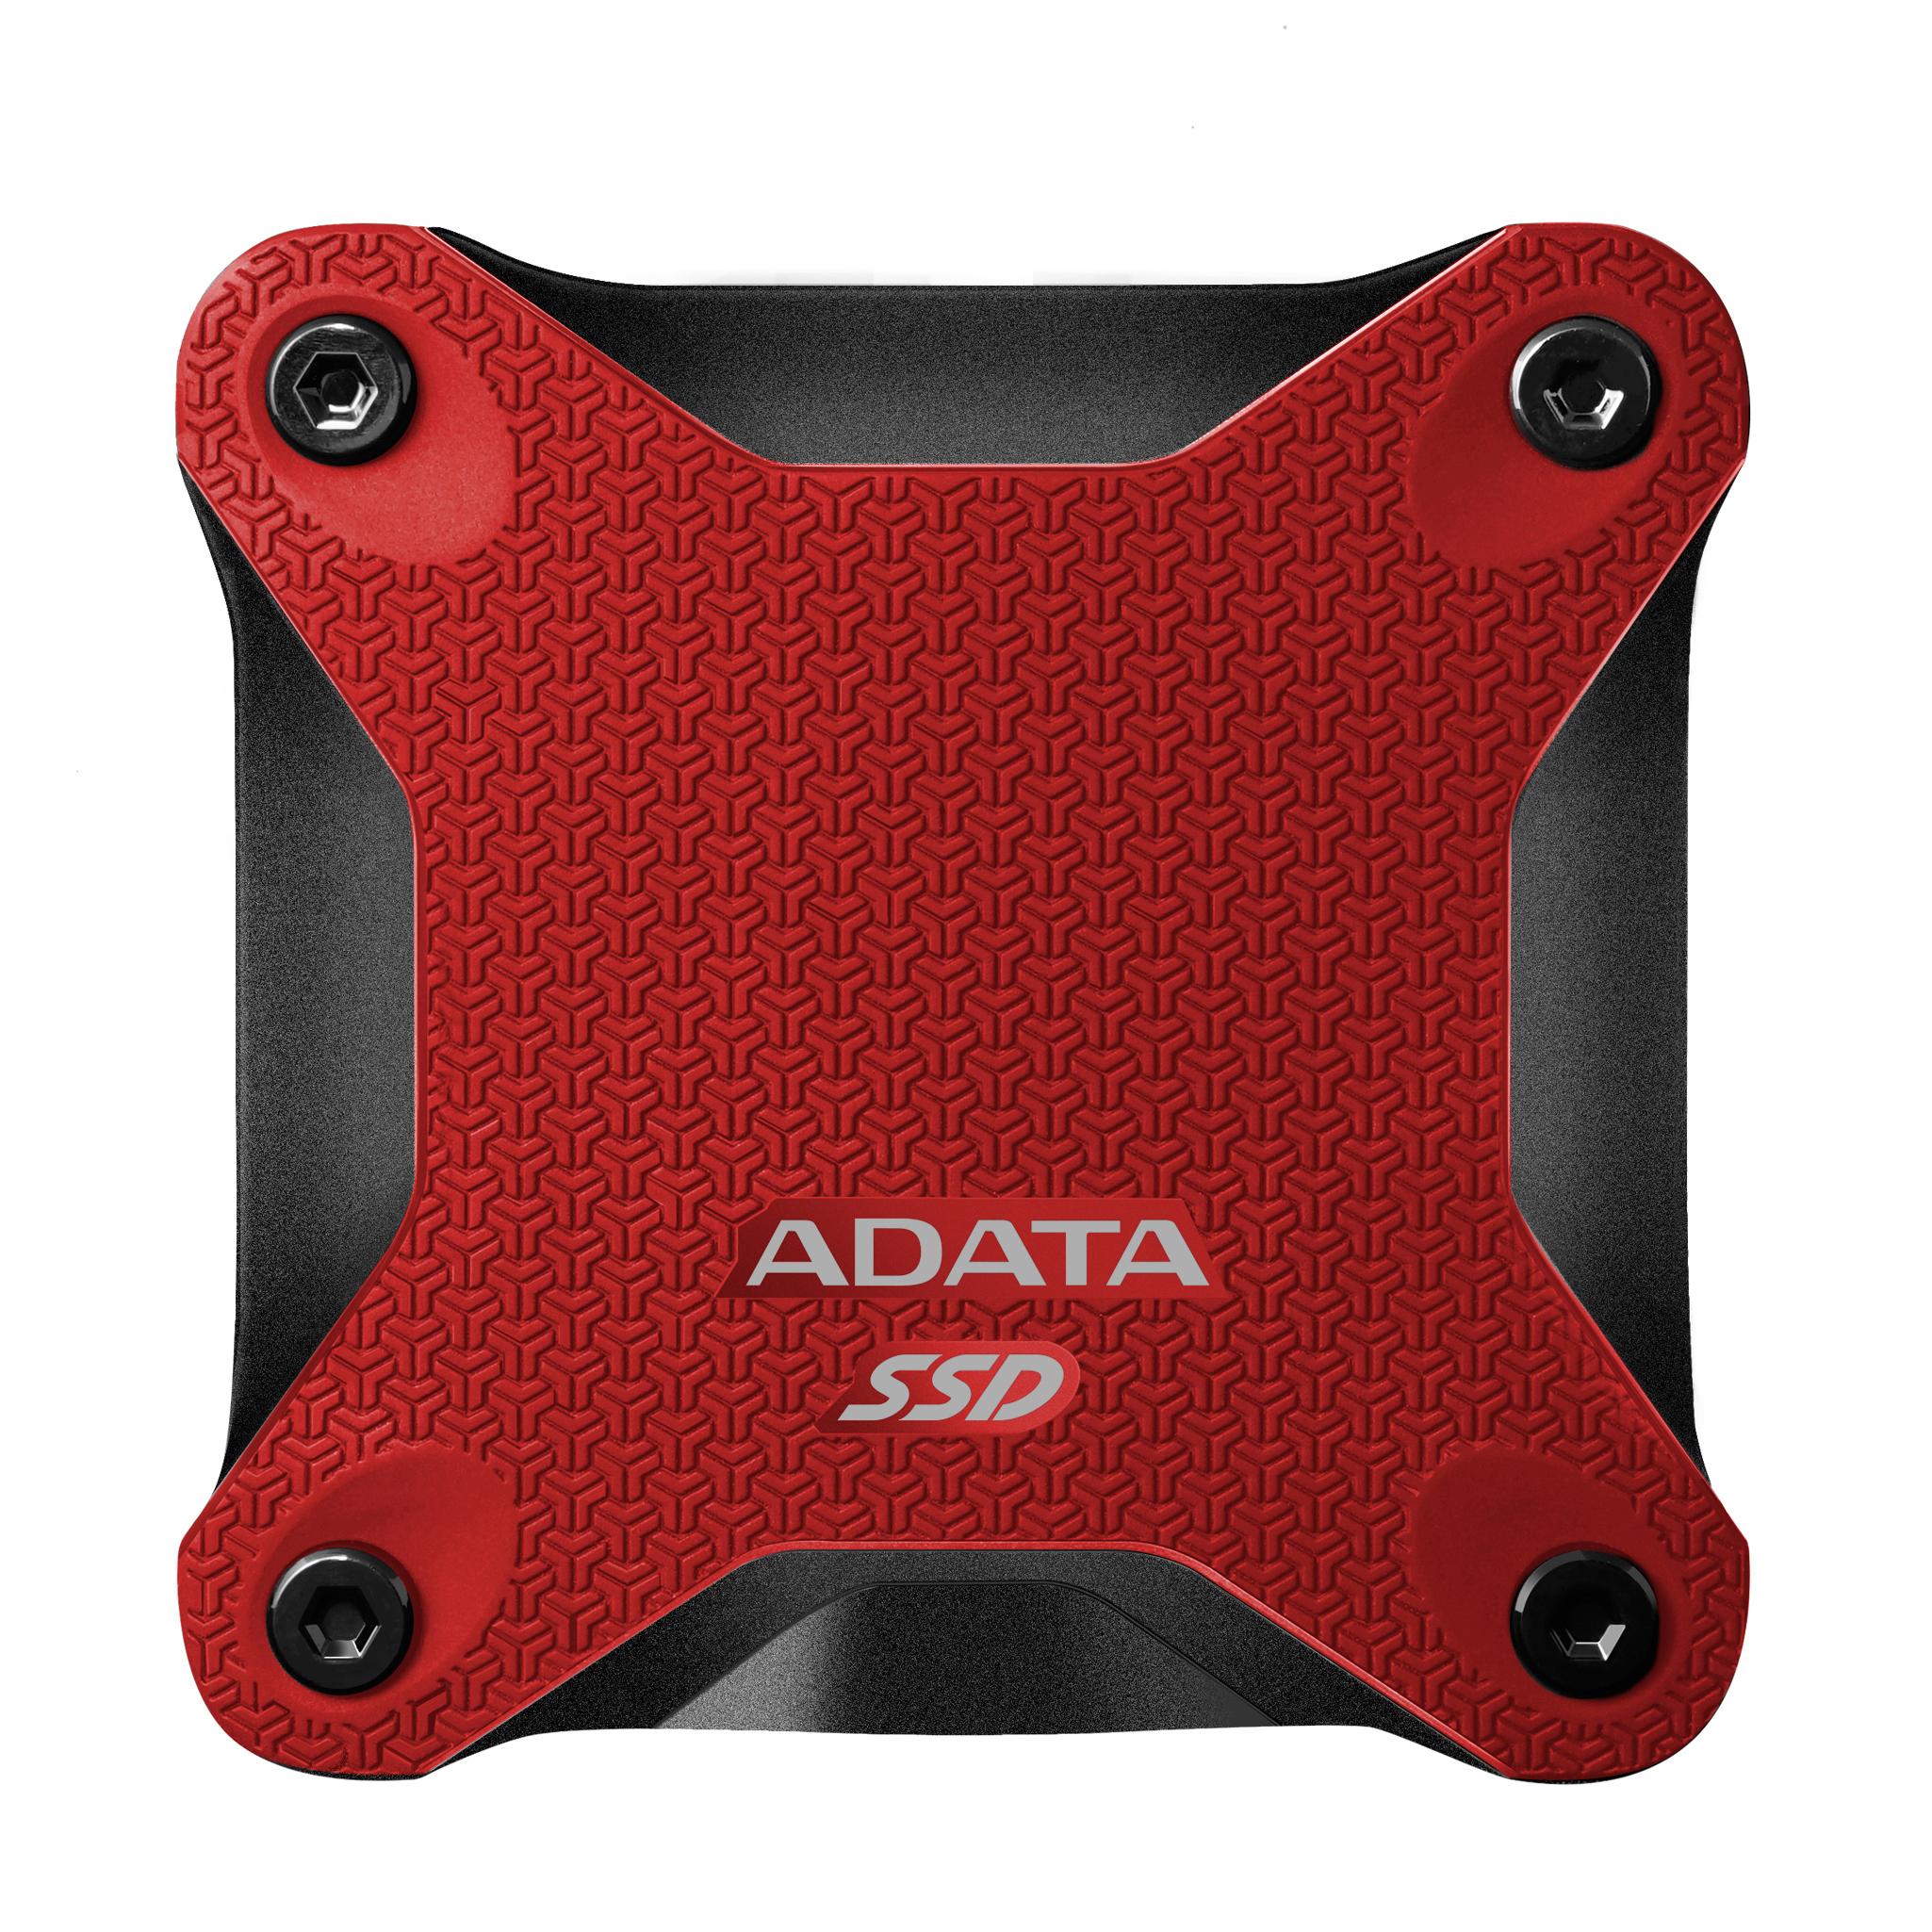 Rot/Schwarz GB SSD, SD600 Festplatte, extern, 2,5 Zoll, ADATA 512